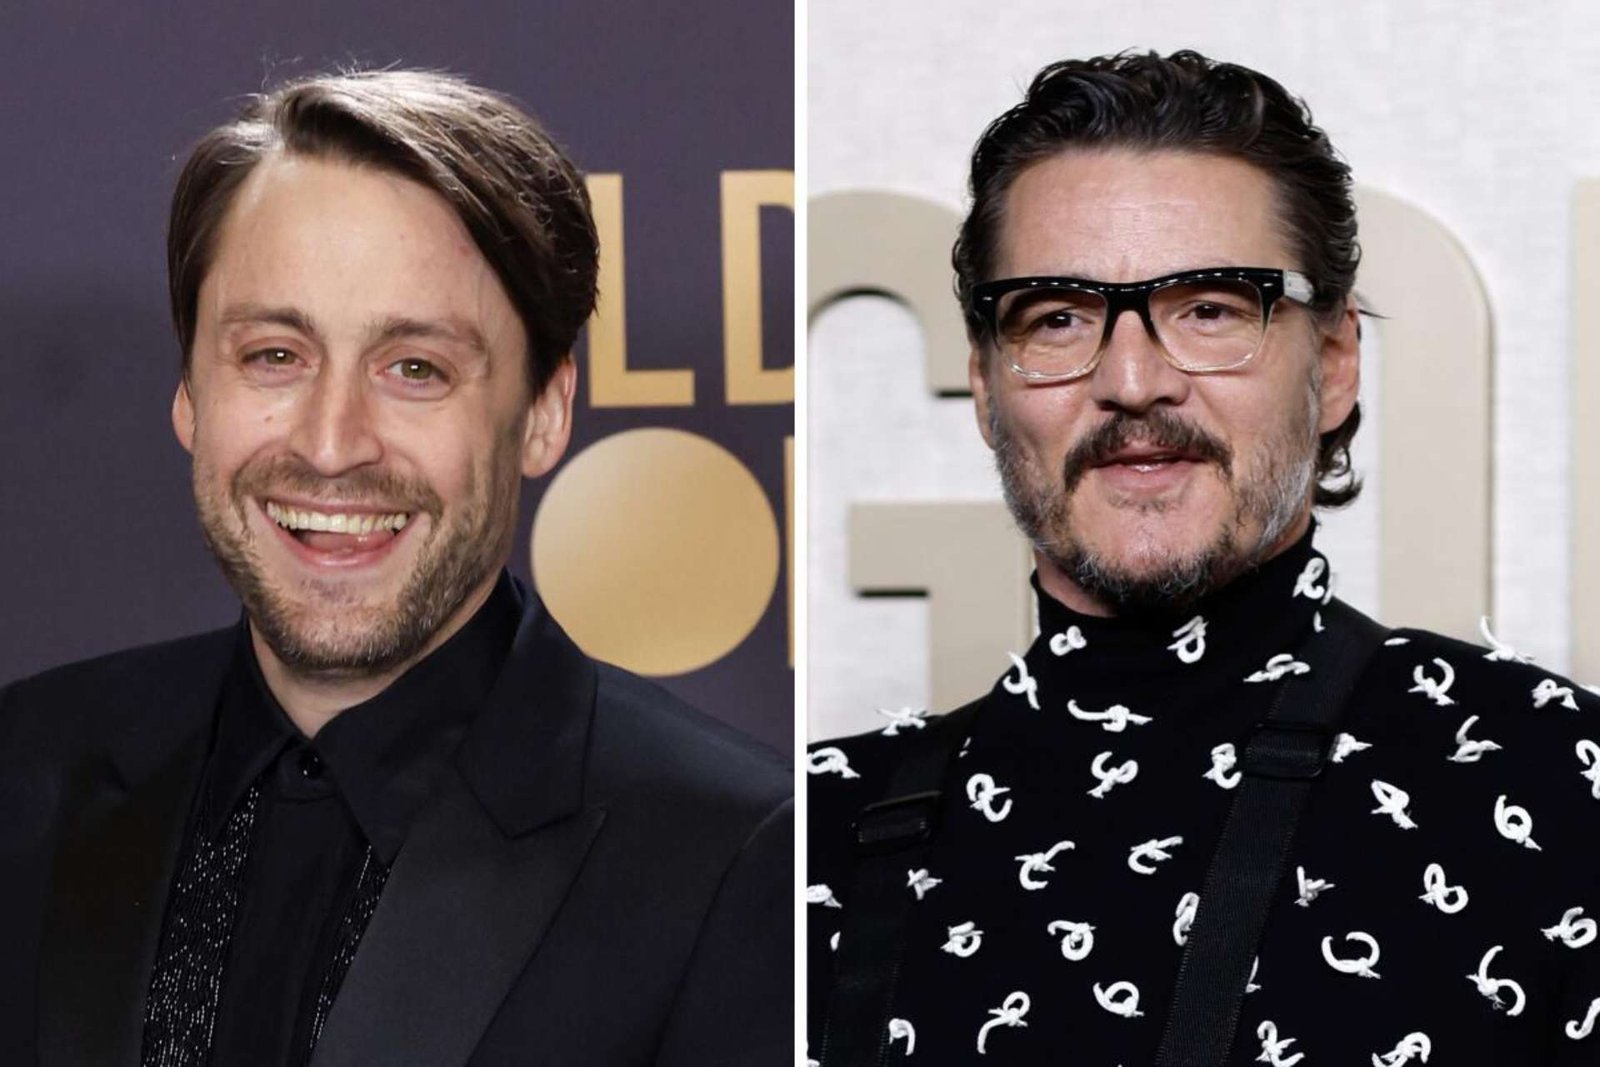 Pedro Pascal and Kieran Culkin’s Playful Banter Steals the Spotlight at Golden Globes